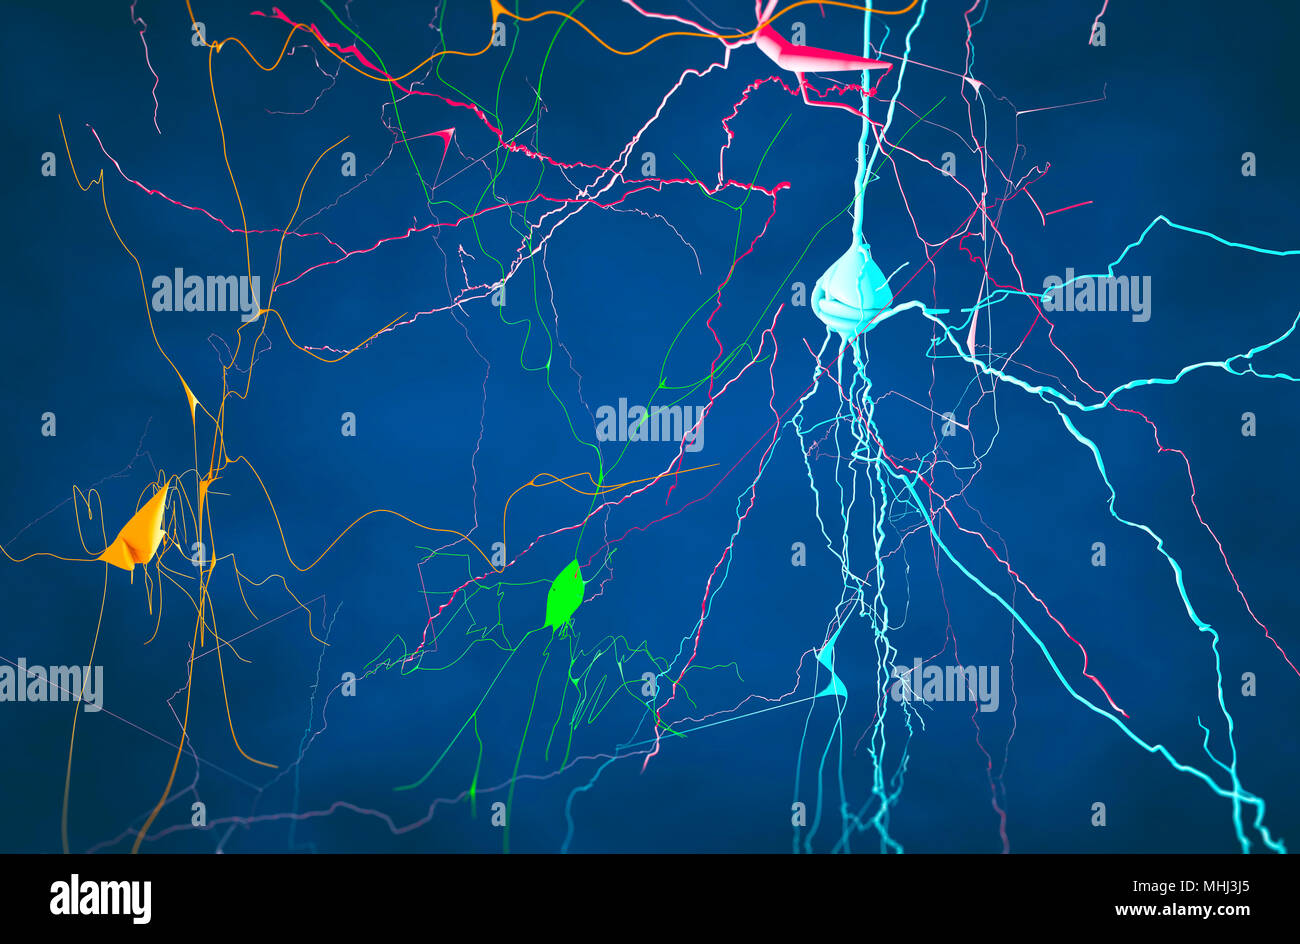 Brain, neurons, synapses, neural network circuit of neurons, degenerative diseases, Parkinson, 3d rendering Stock Photo